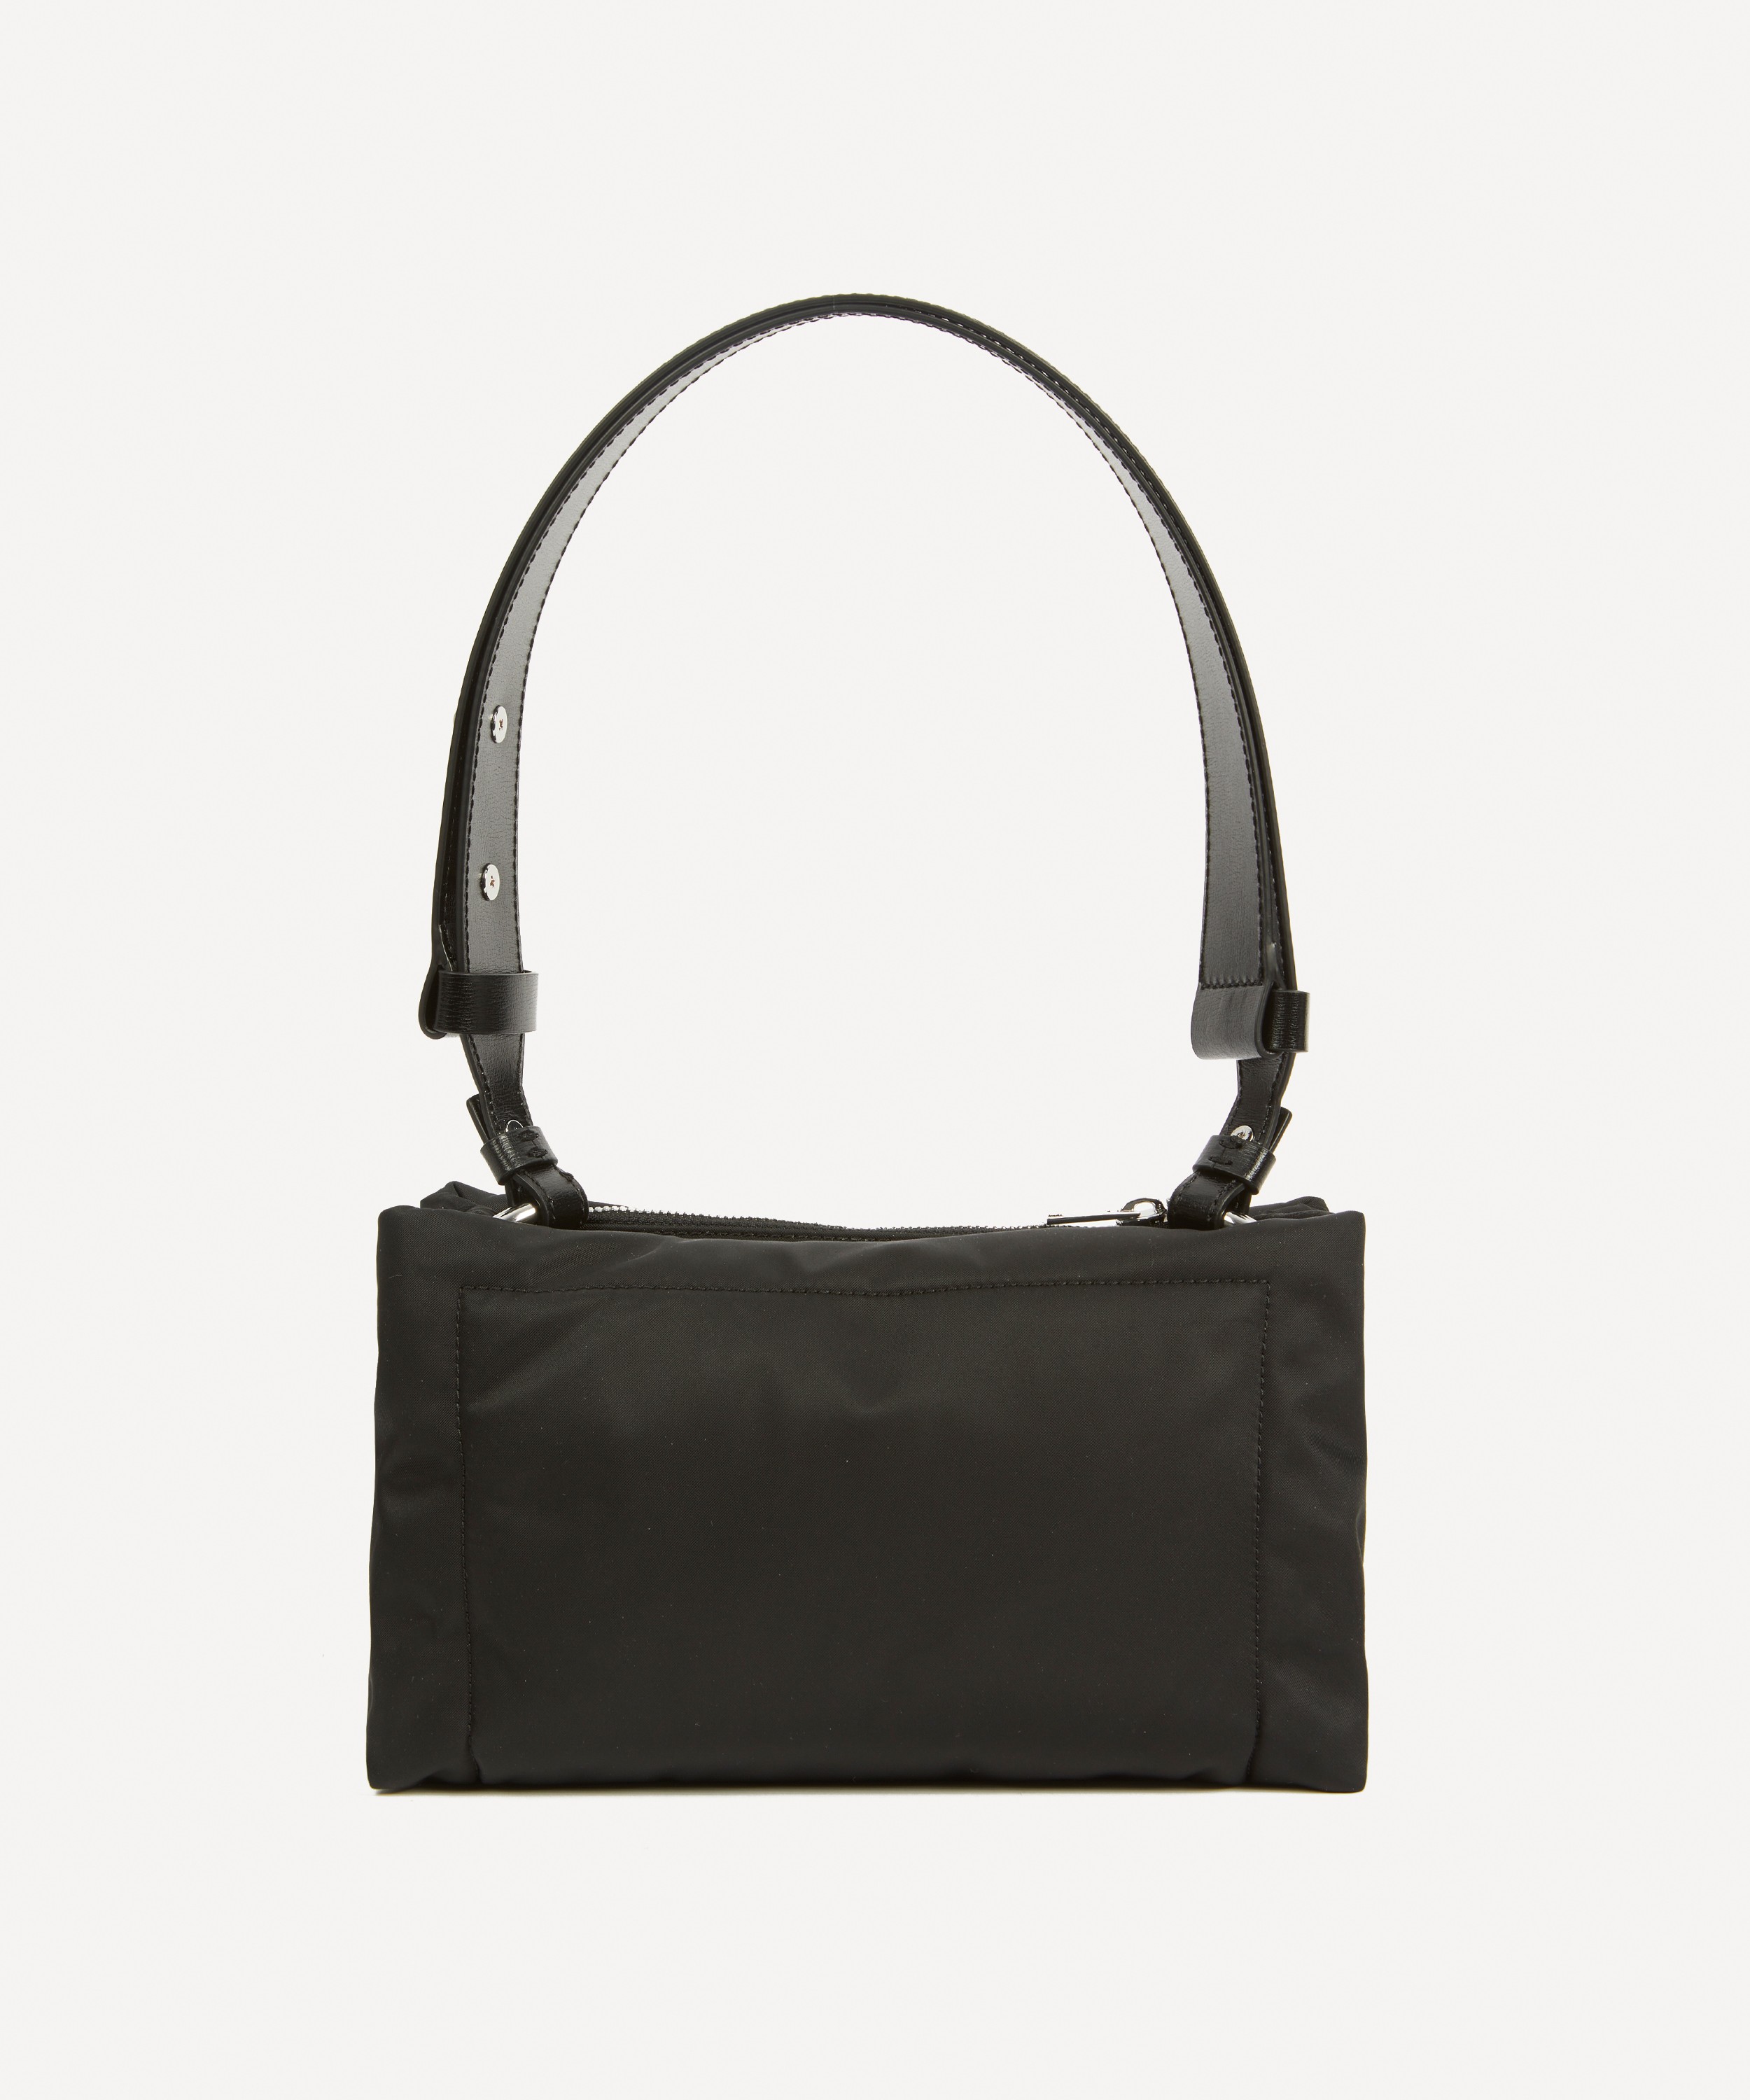 Prada Crossbody Bag Small Black in Nylon with Silver-tone - GB